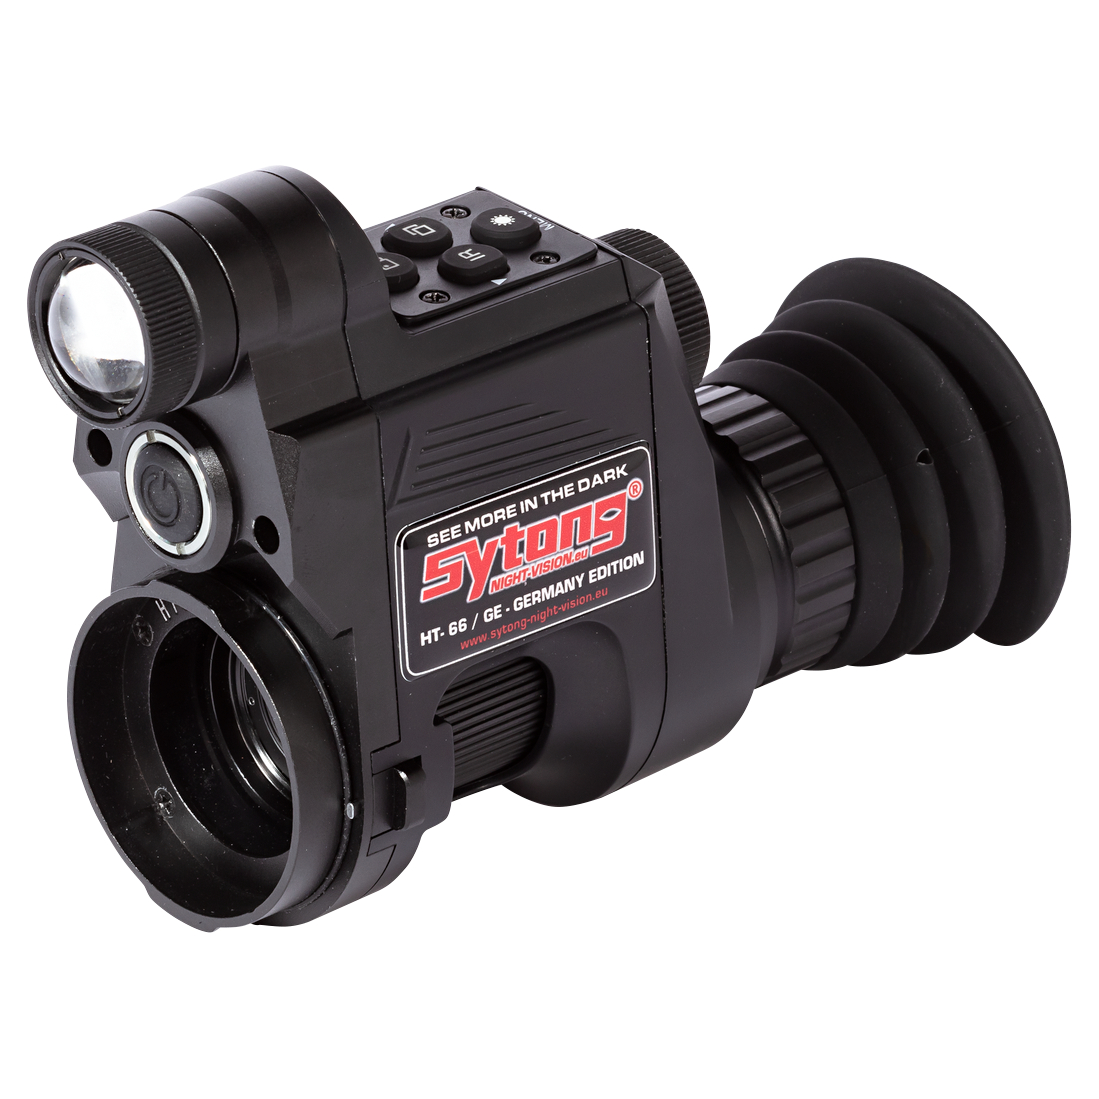 Sytong Night Vision Device HT-66 -NV850 with 16 mm Lens German-Edition at  low prices | Askari Hunting Shop